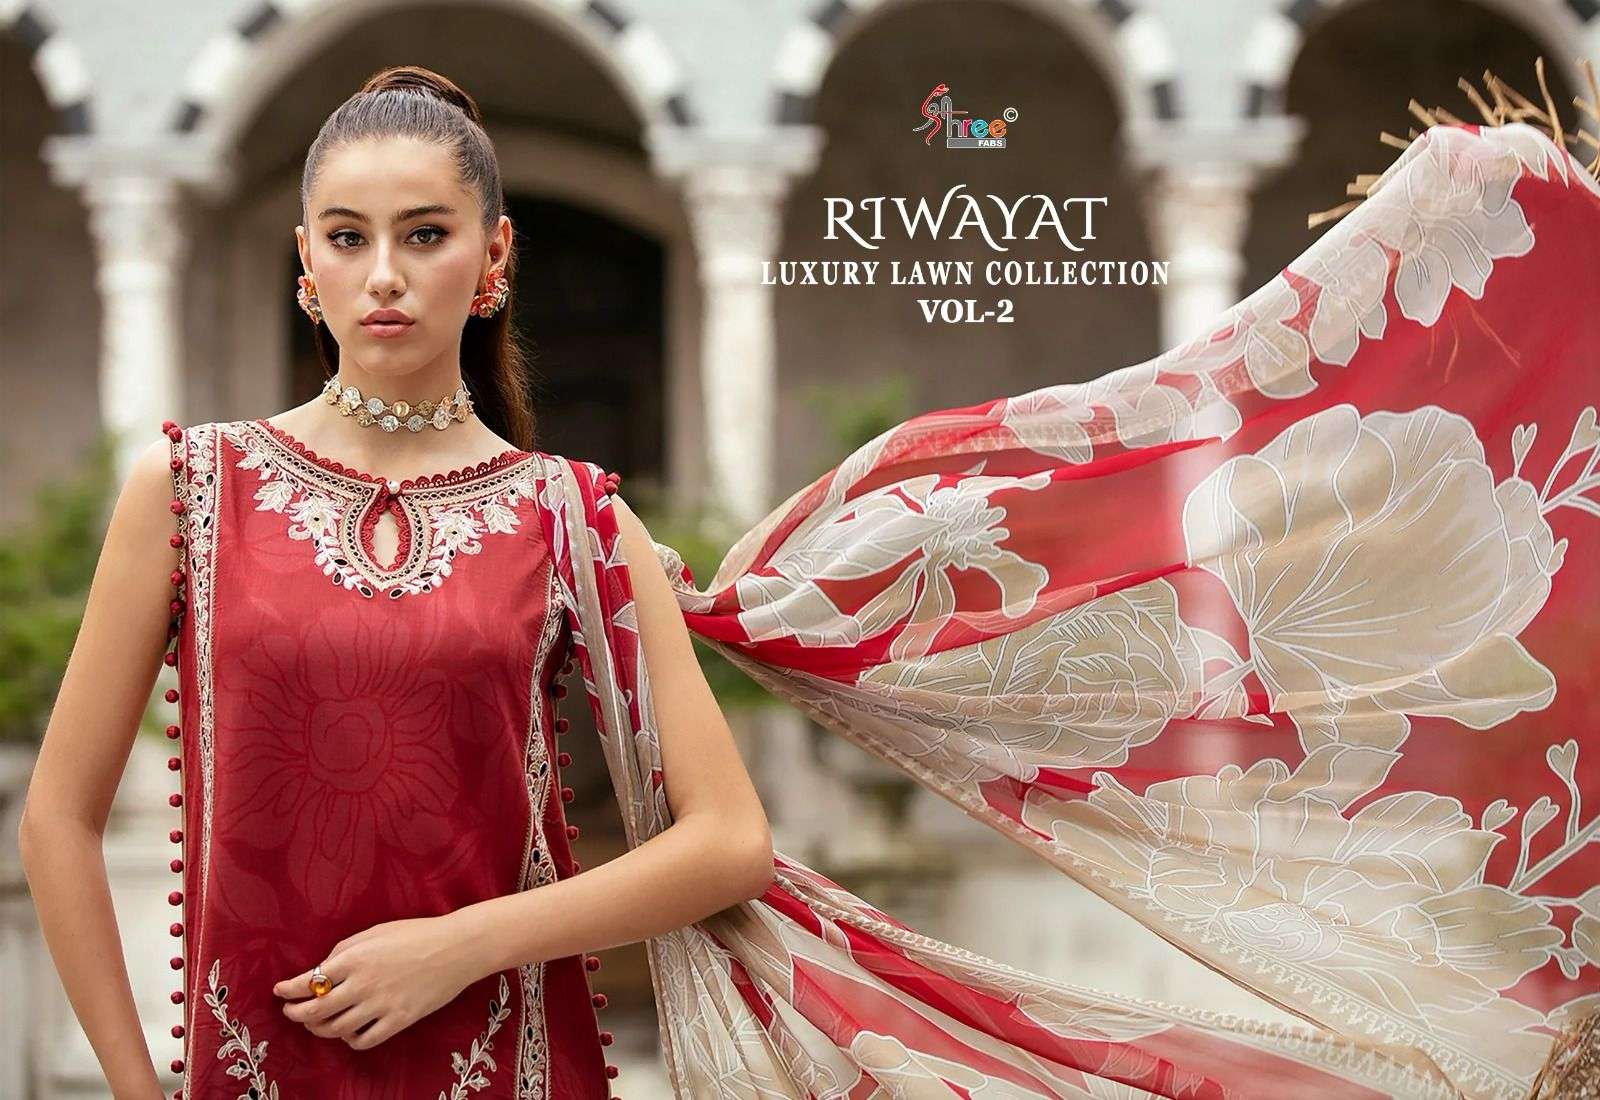 shree fabs riwayat luxury lawn collection vol-2 3390-3396 series designer wedding special pakistani suit wholesaler surat gujarat